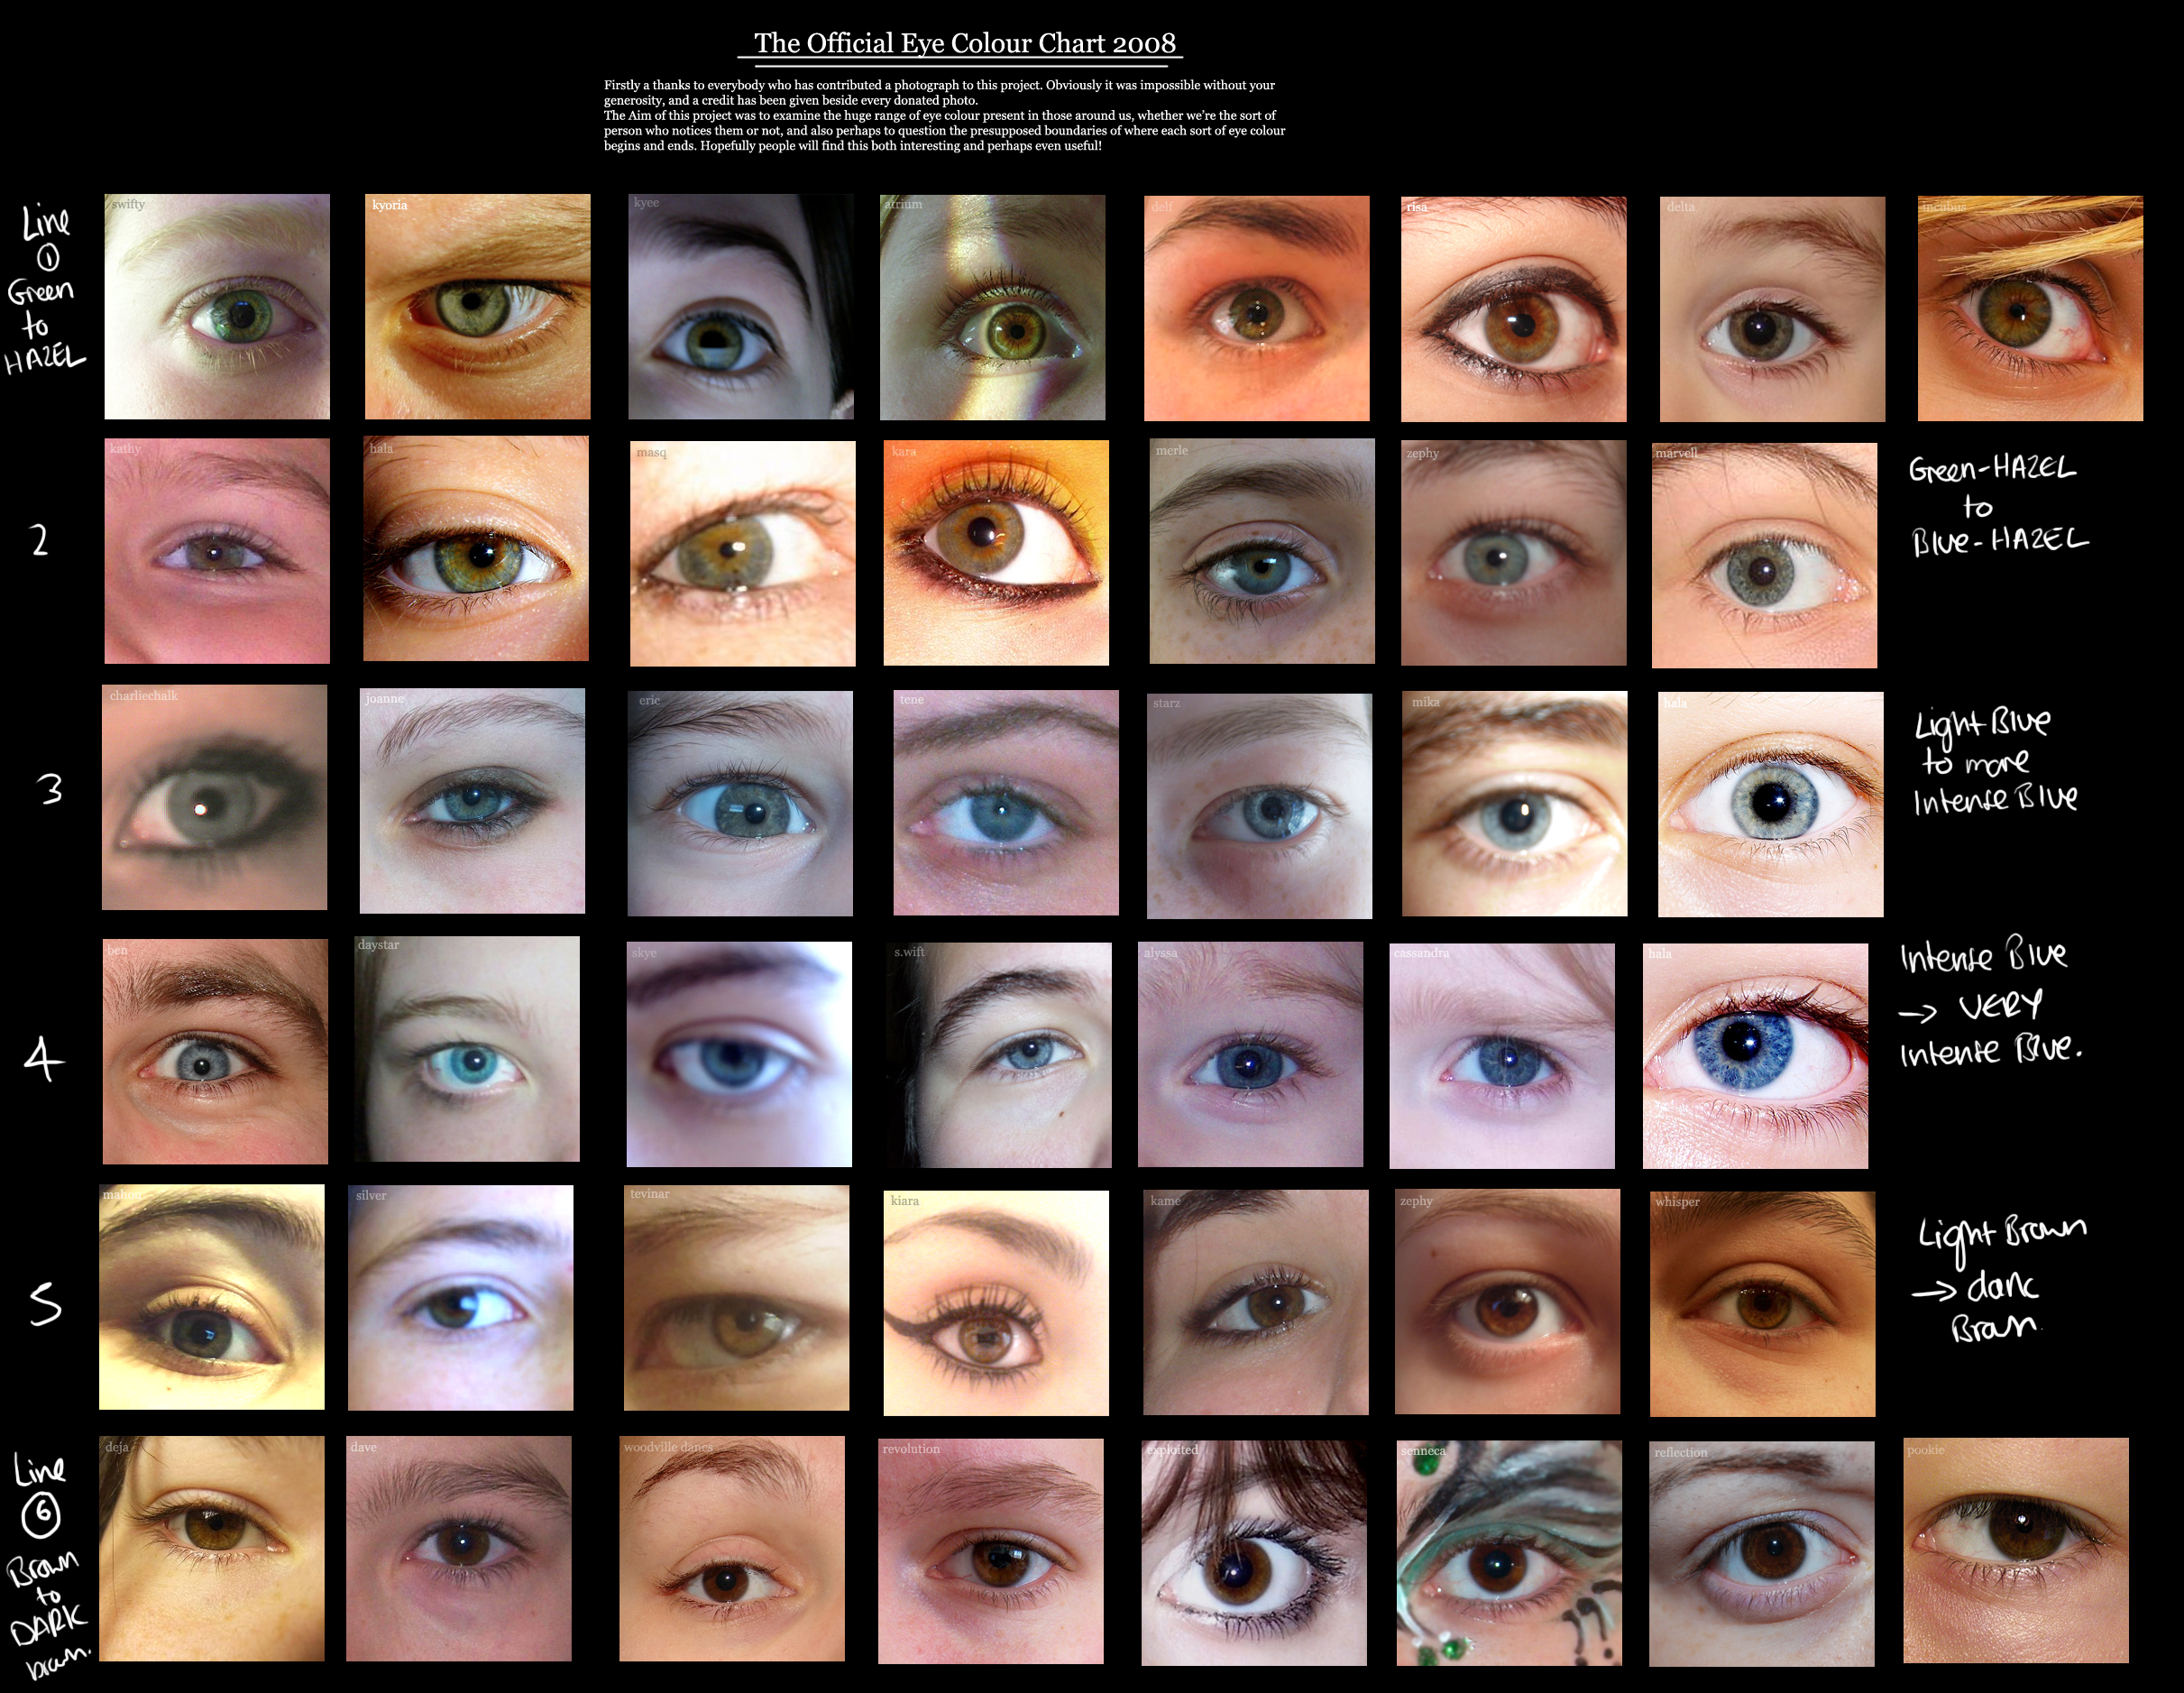 Human Eye coloUr chart by Delpigeon – The Eye Si(gh)t